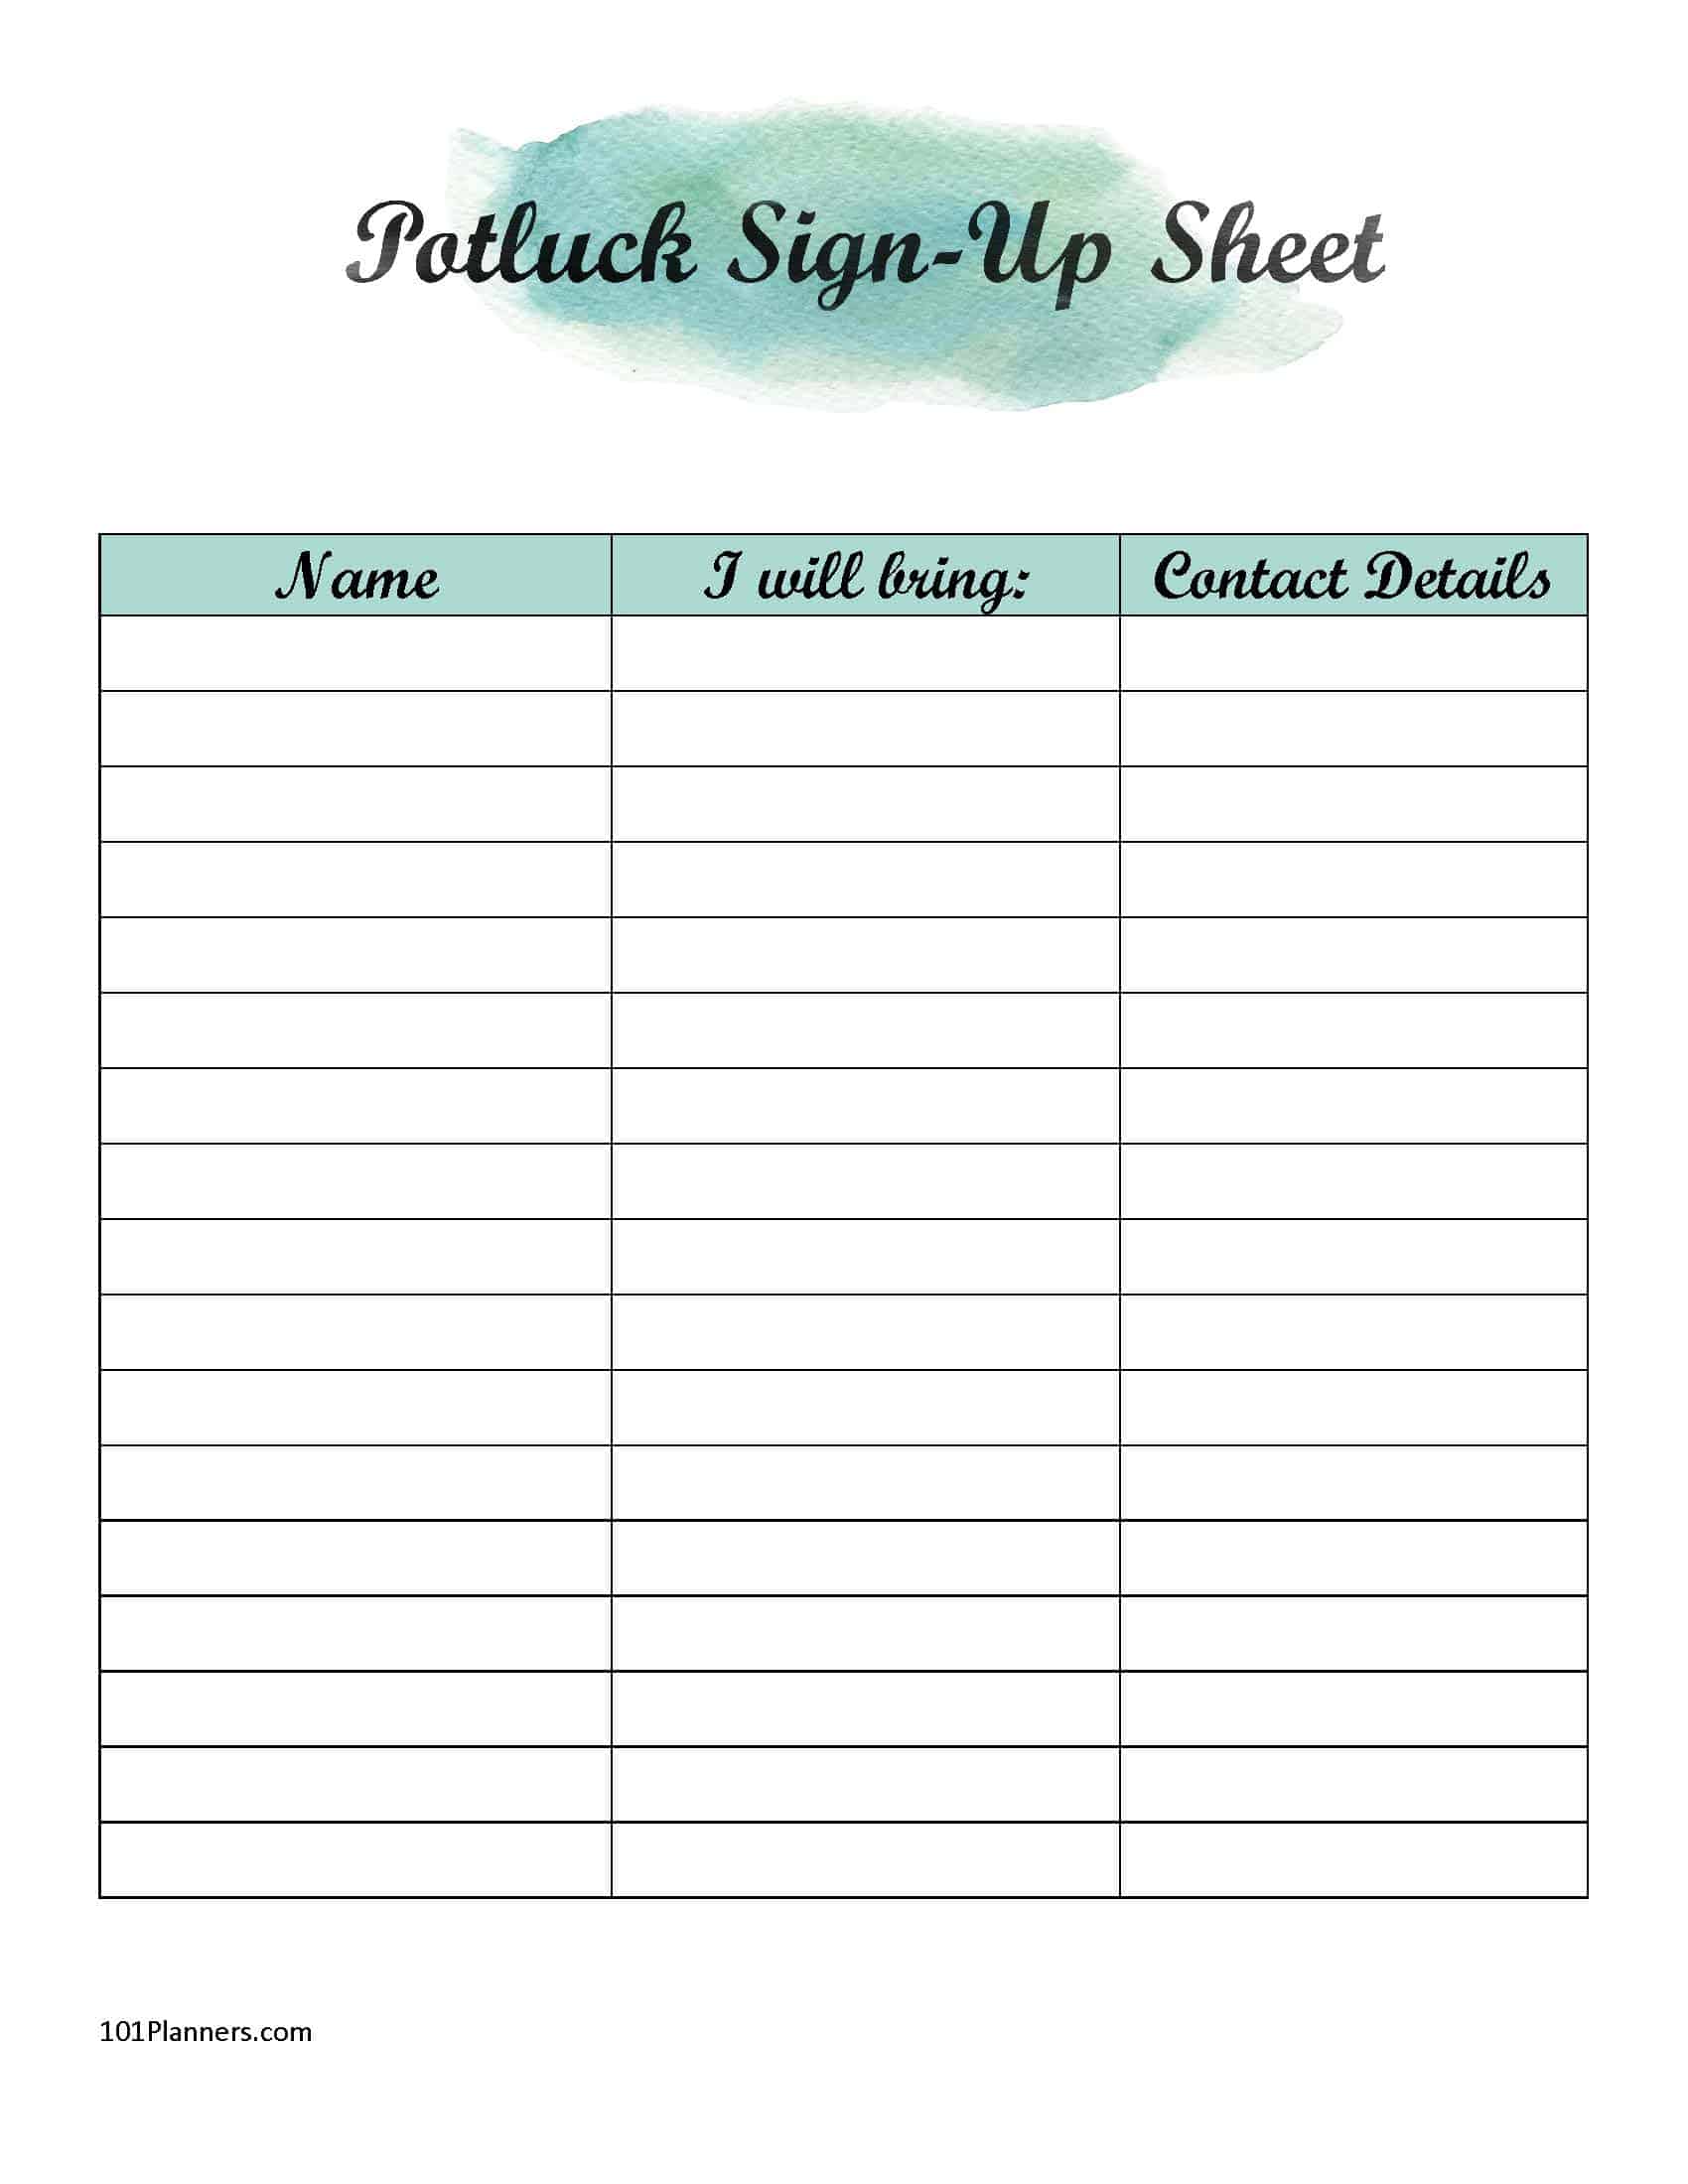 printable-potluck-sign-up-sheet-template-printable-templates